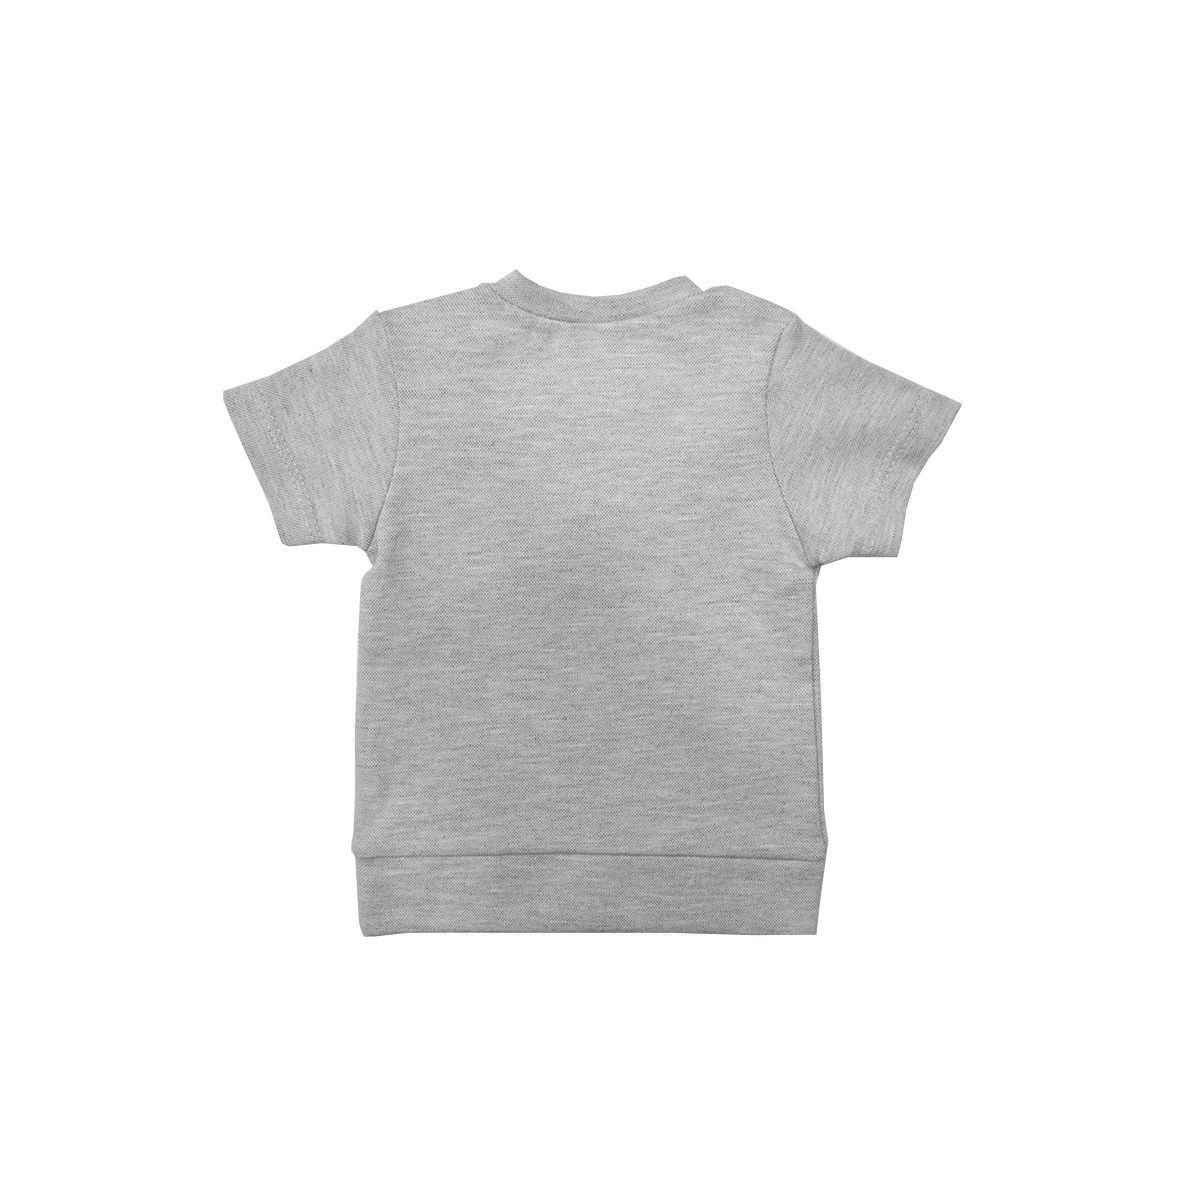 ست تی شرت و شلوار نوزادی نیلی مدل  firend s 2022 -  - 4